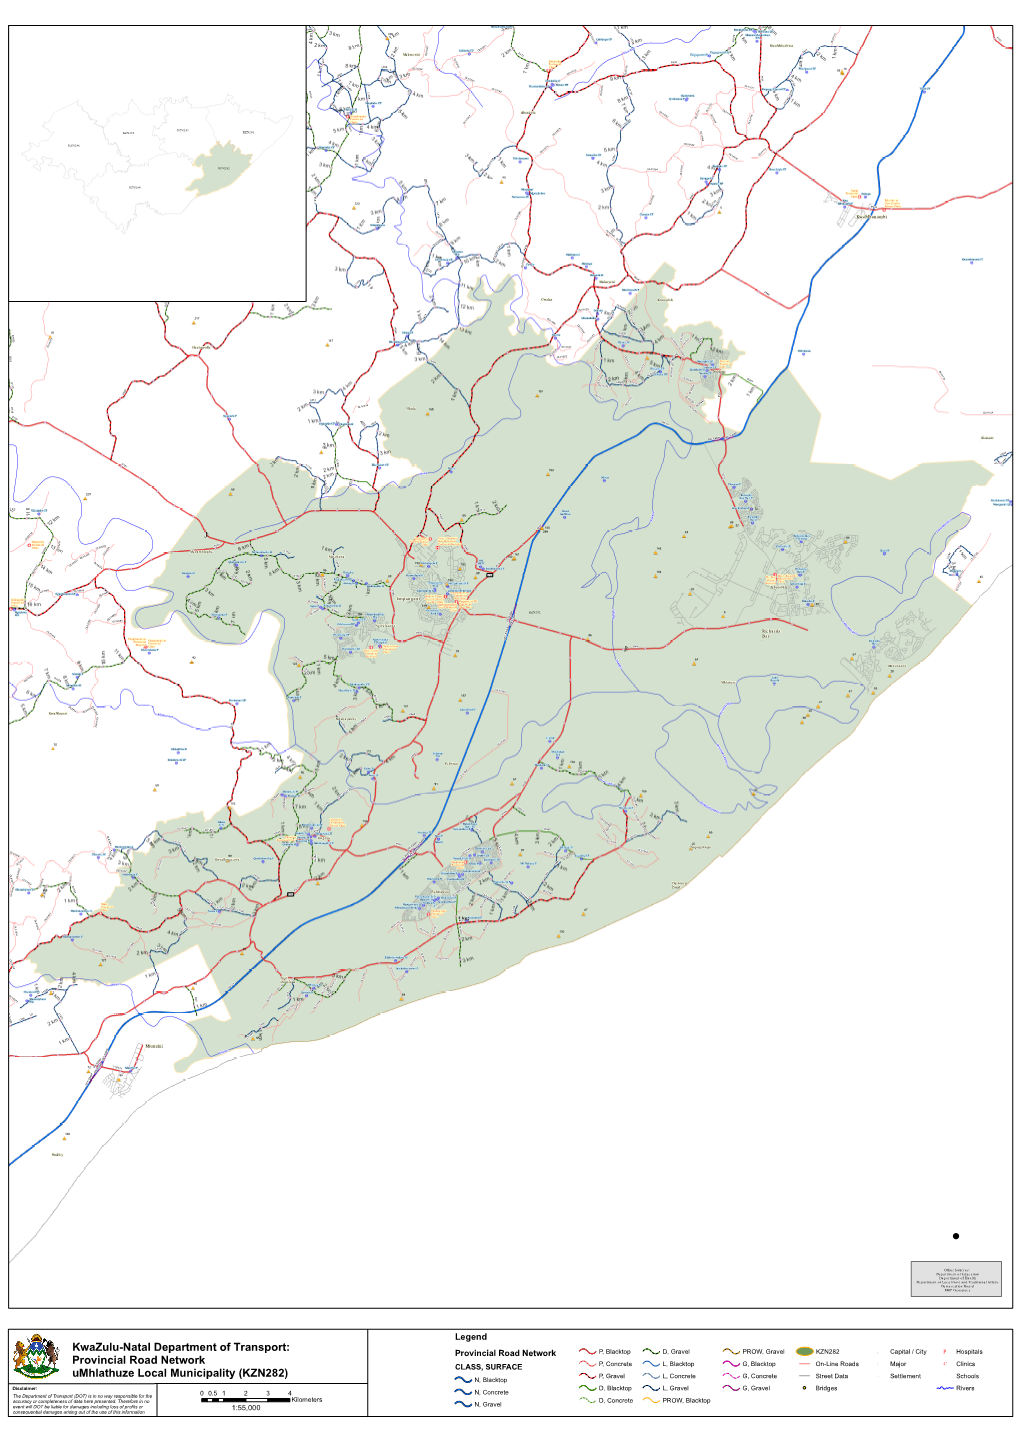 Provincial Road Network Umhlathuze Local Municipality (KZN282)